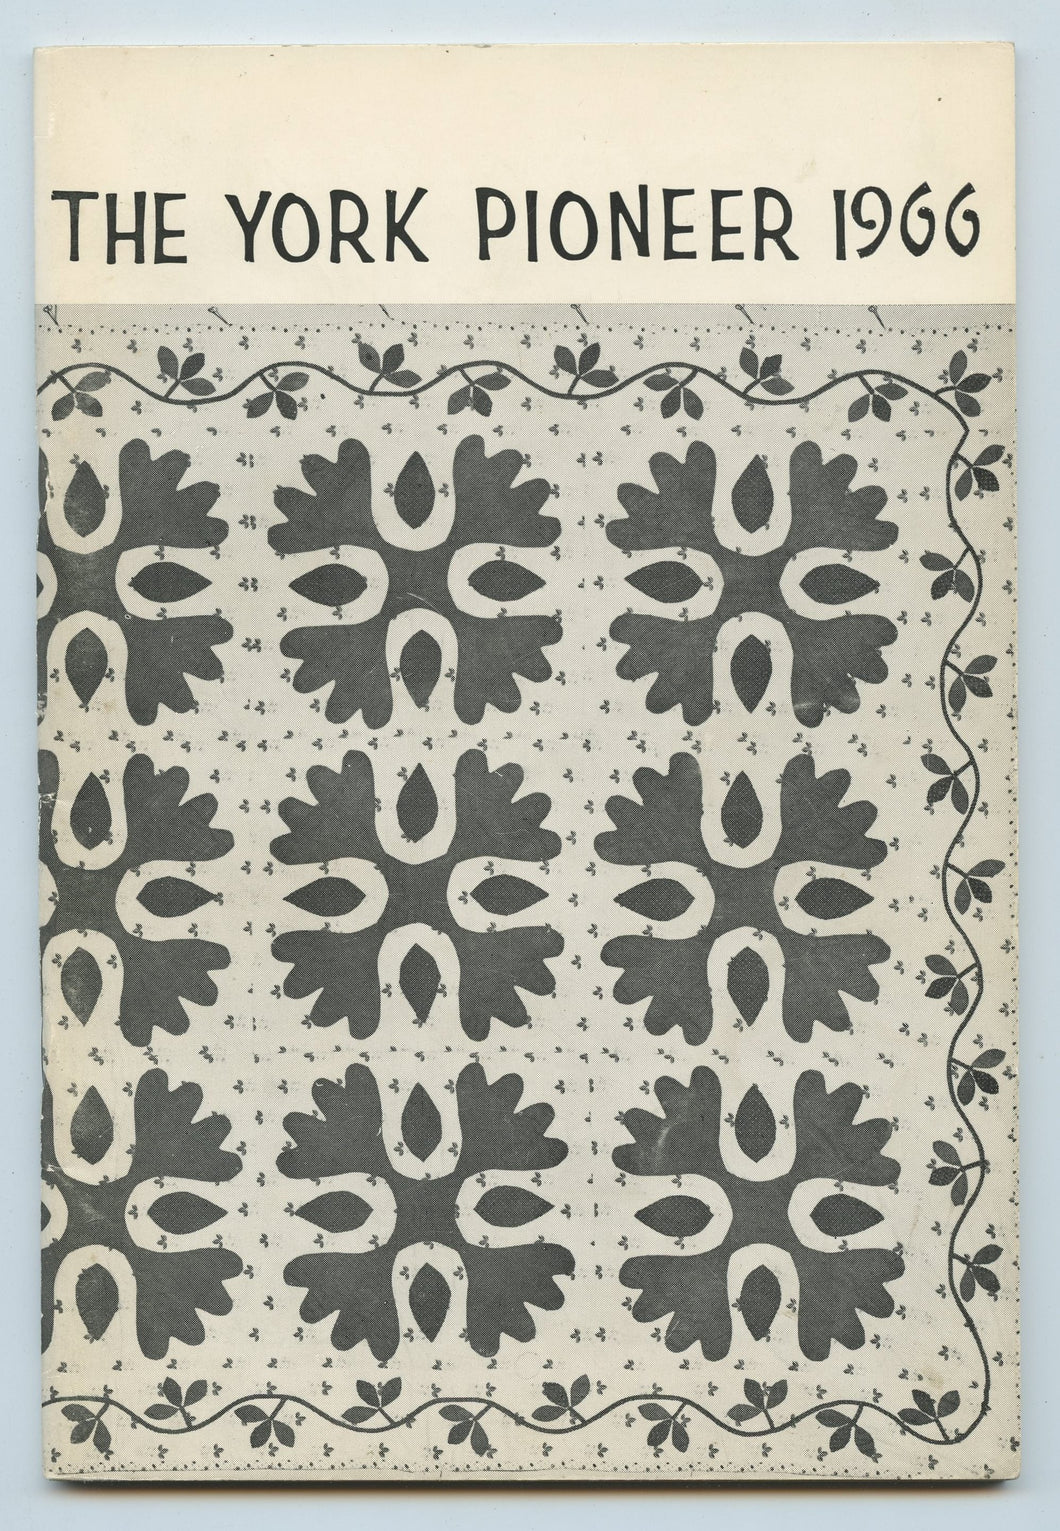 The York Pioneer 1966